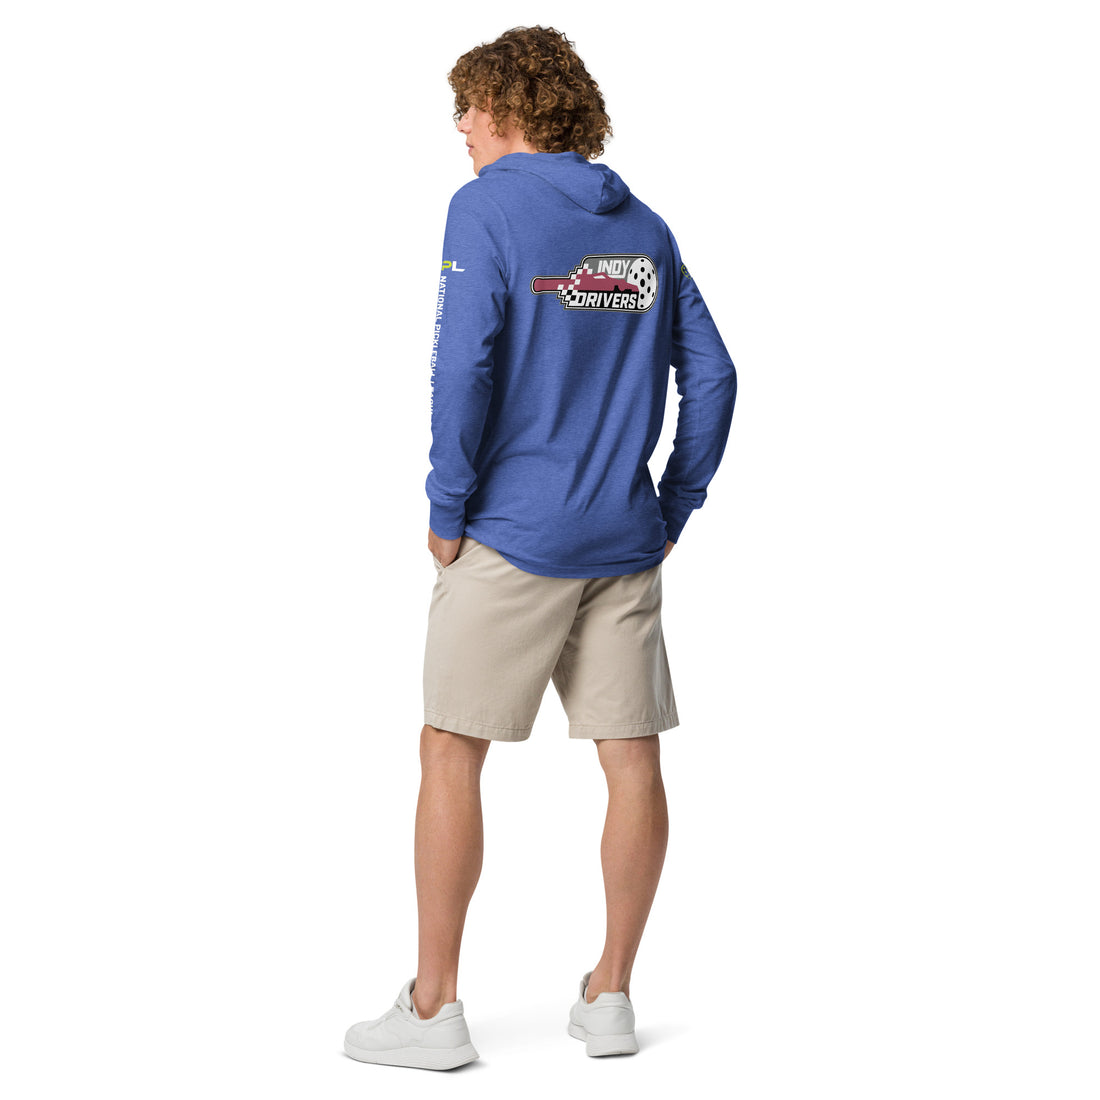 Indy Drivers™ NPL™ Hooded Long Sleeve Unisex T-Shirt! 🏎️🎾